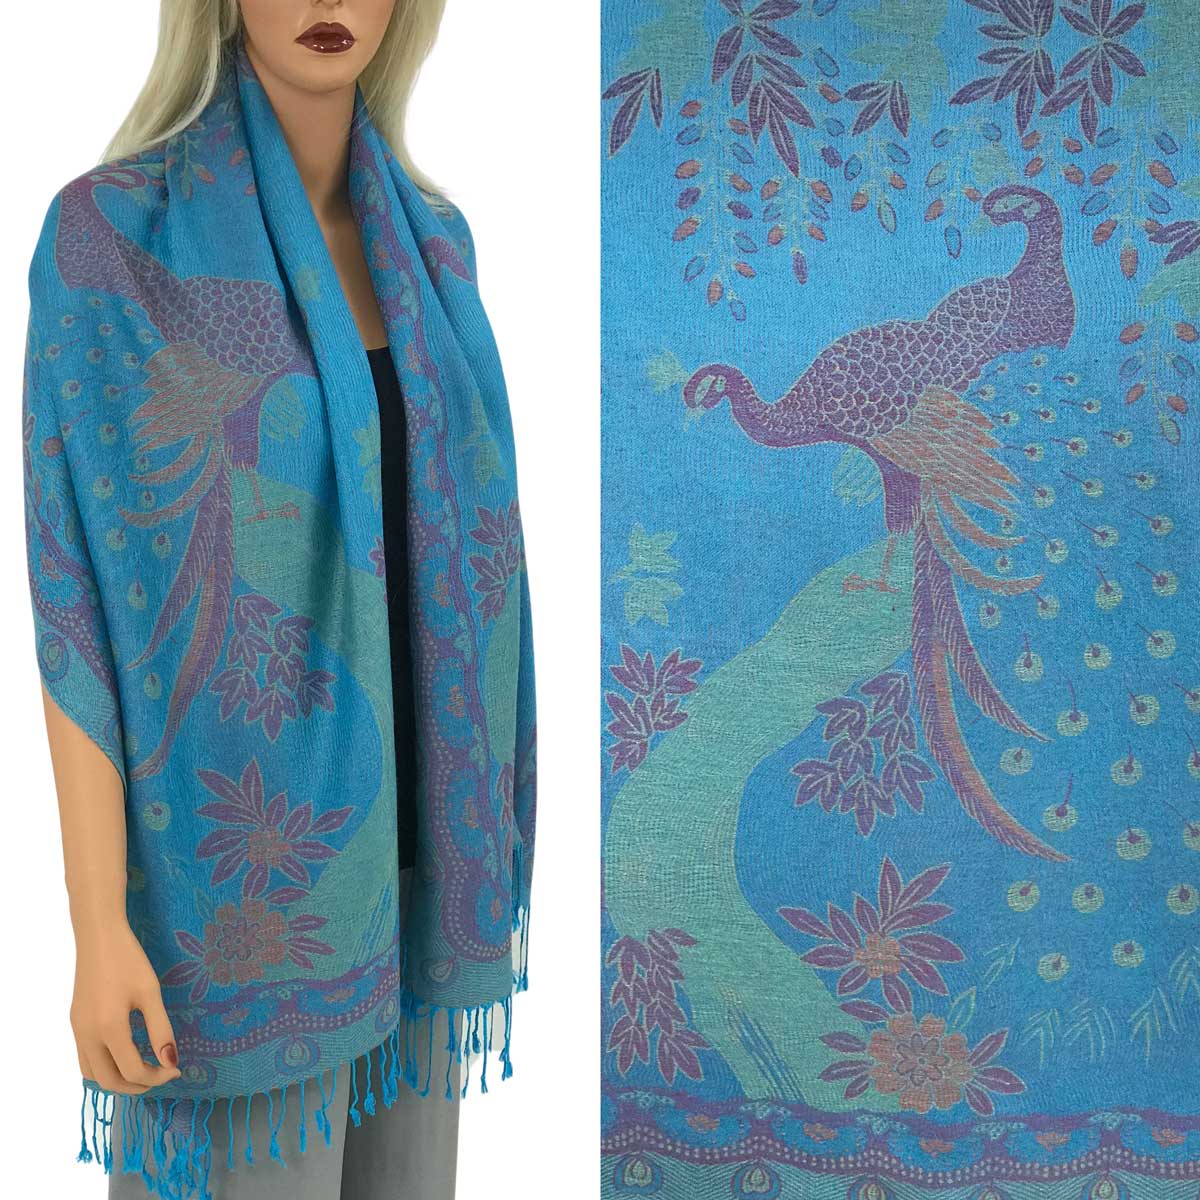 Peacock - #11 Turquoise Multi<br>
Pashmina Style Shawl